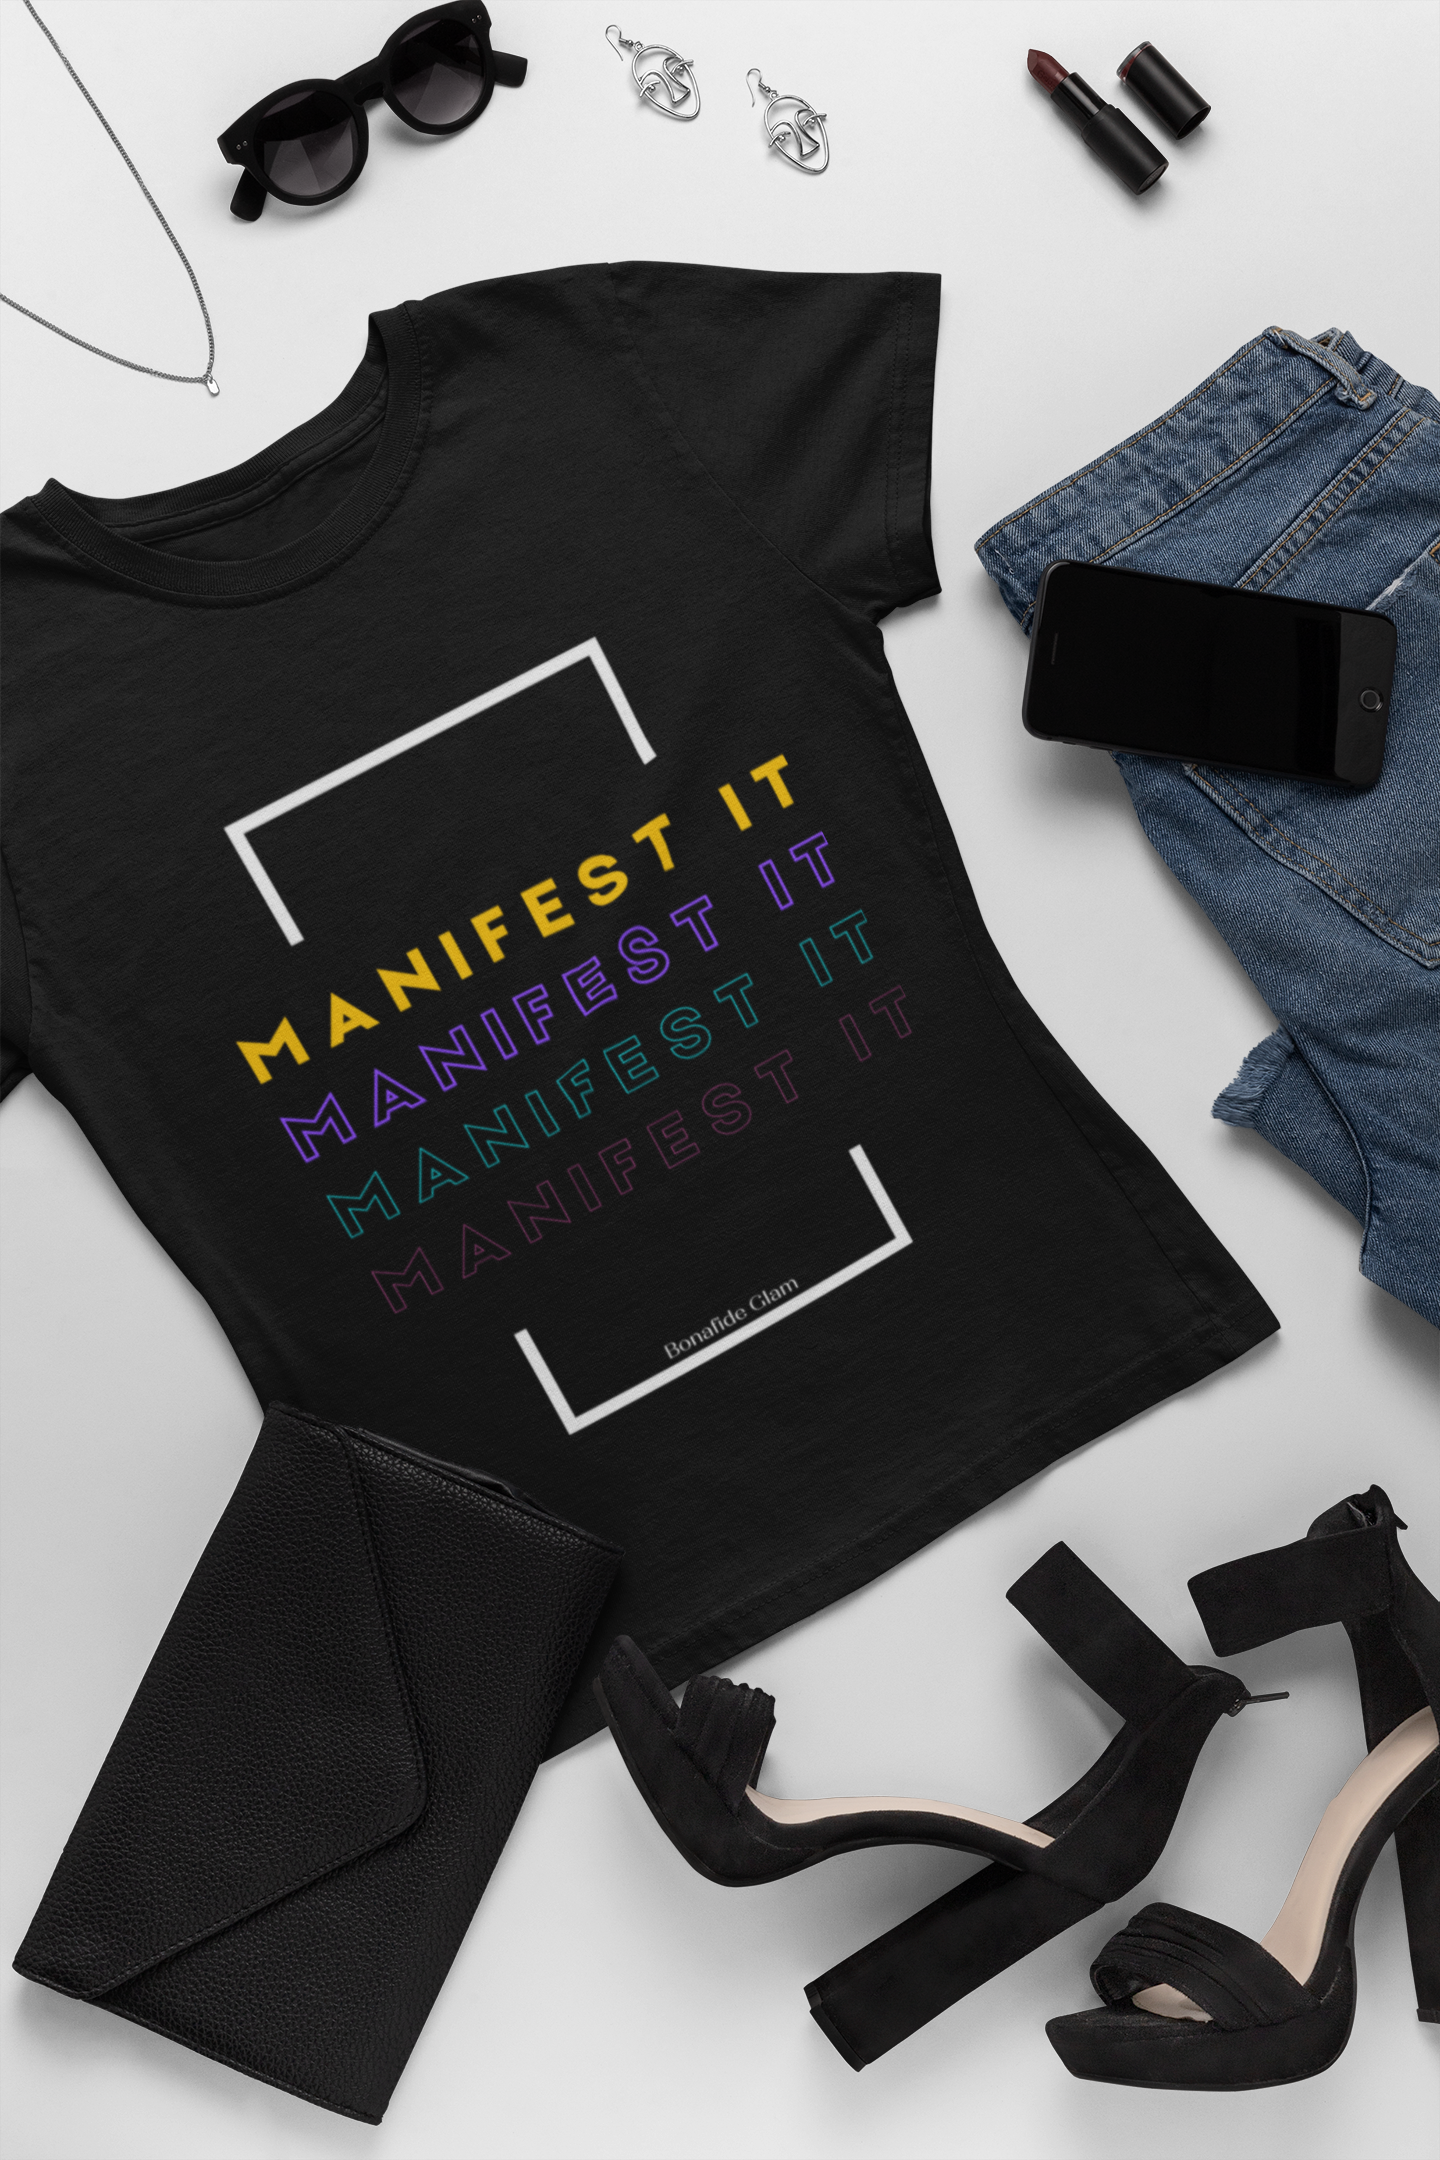 Manifest it tshirt for women